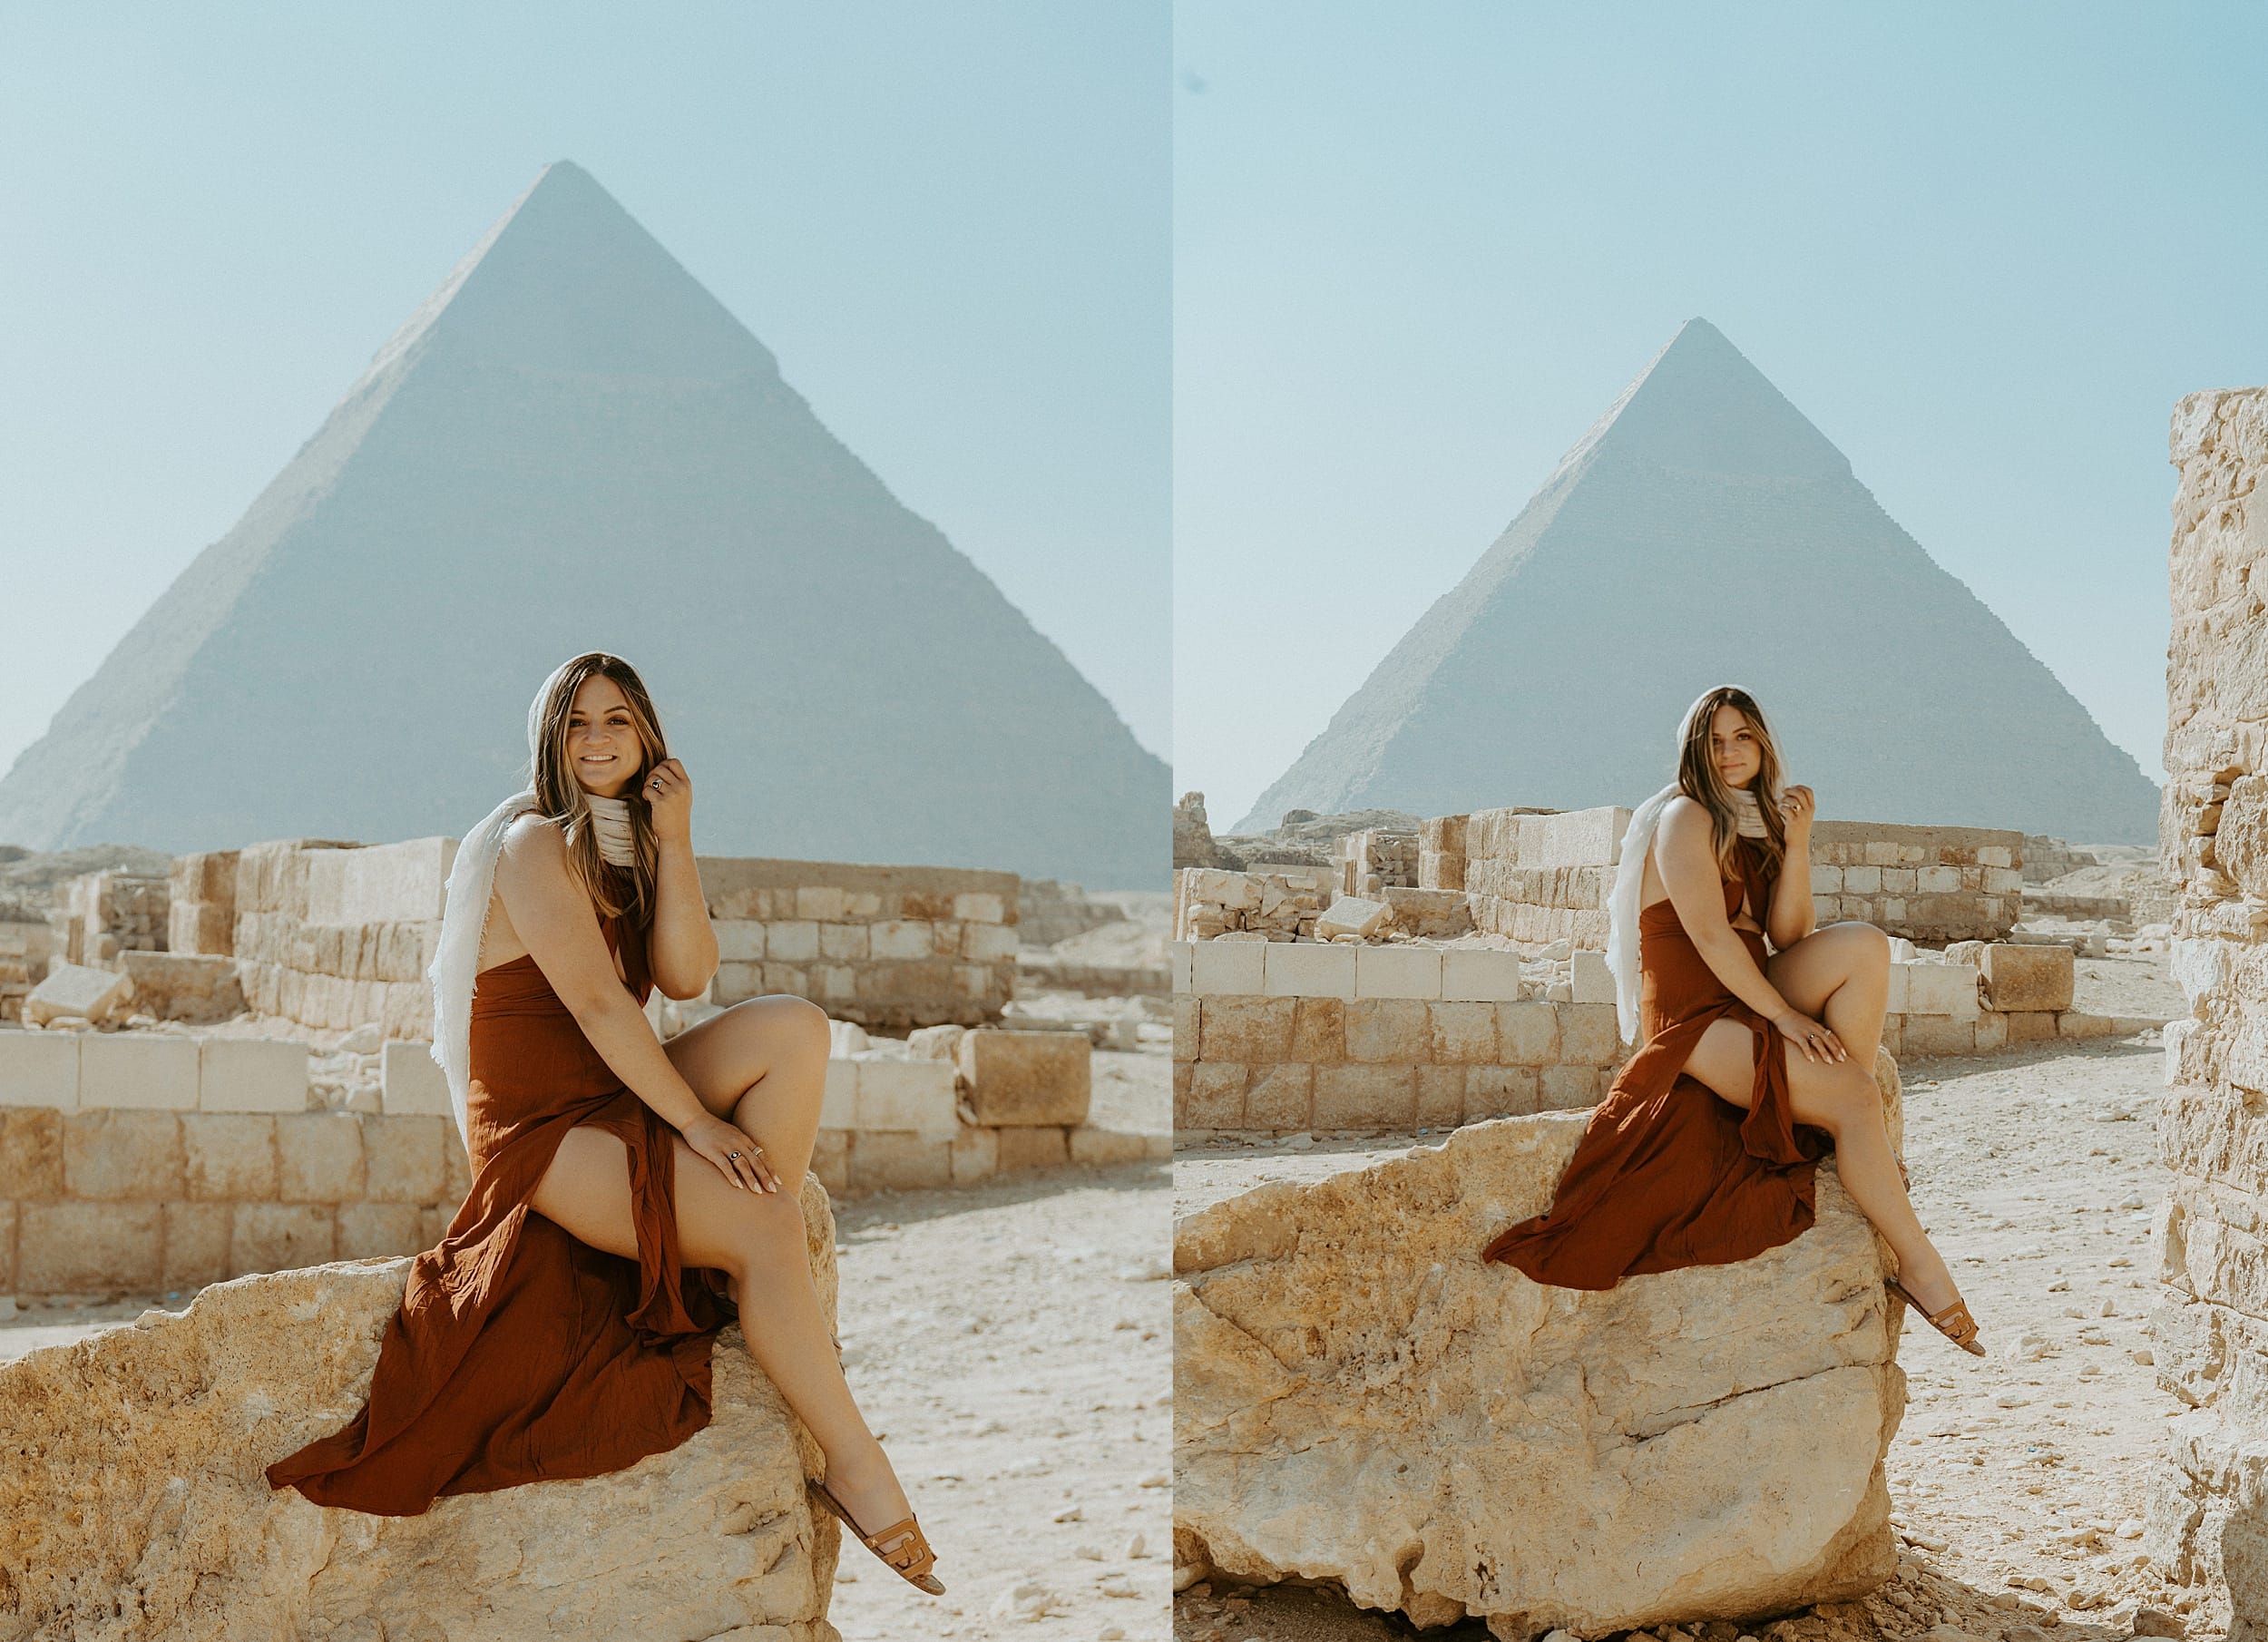 bride on rock pyramid egypt landscape